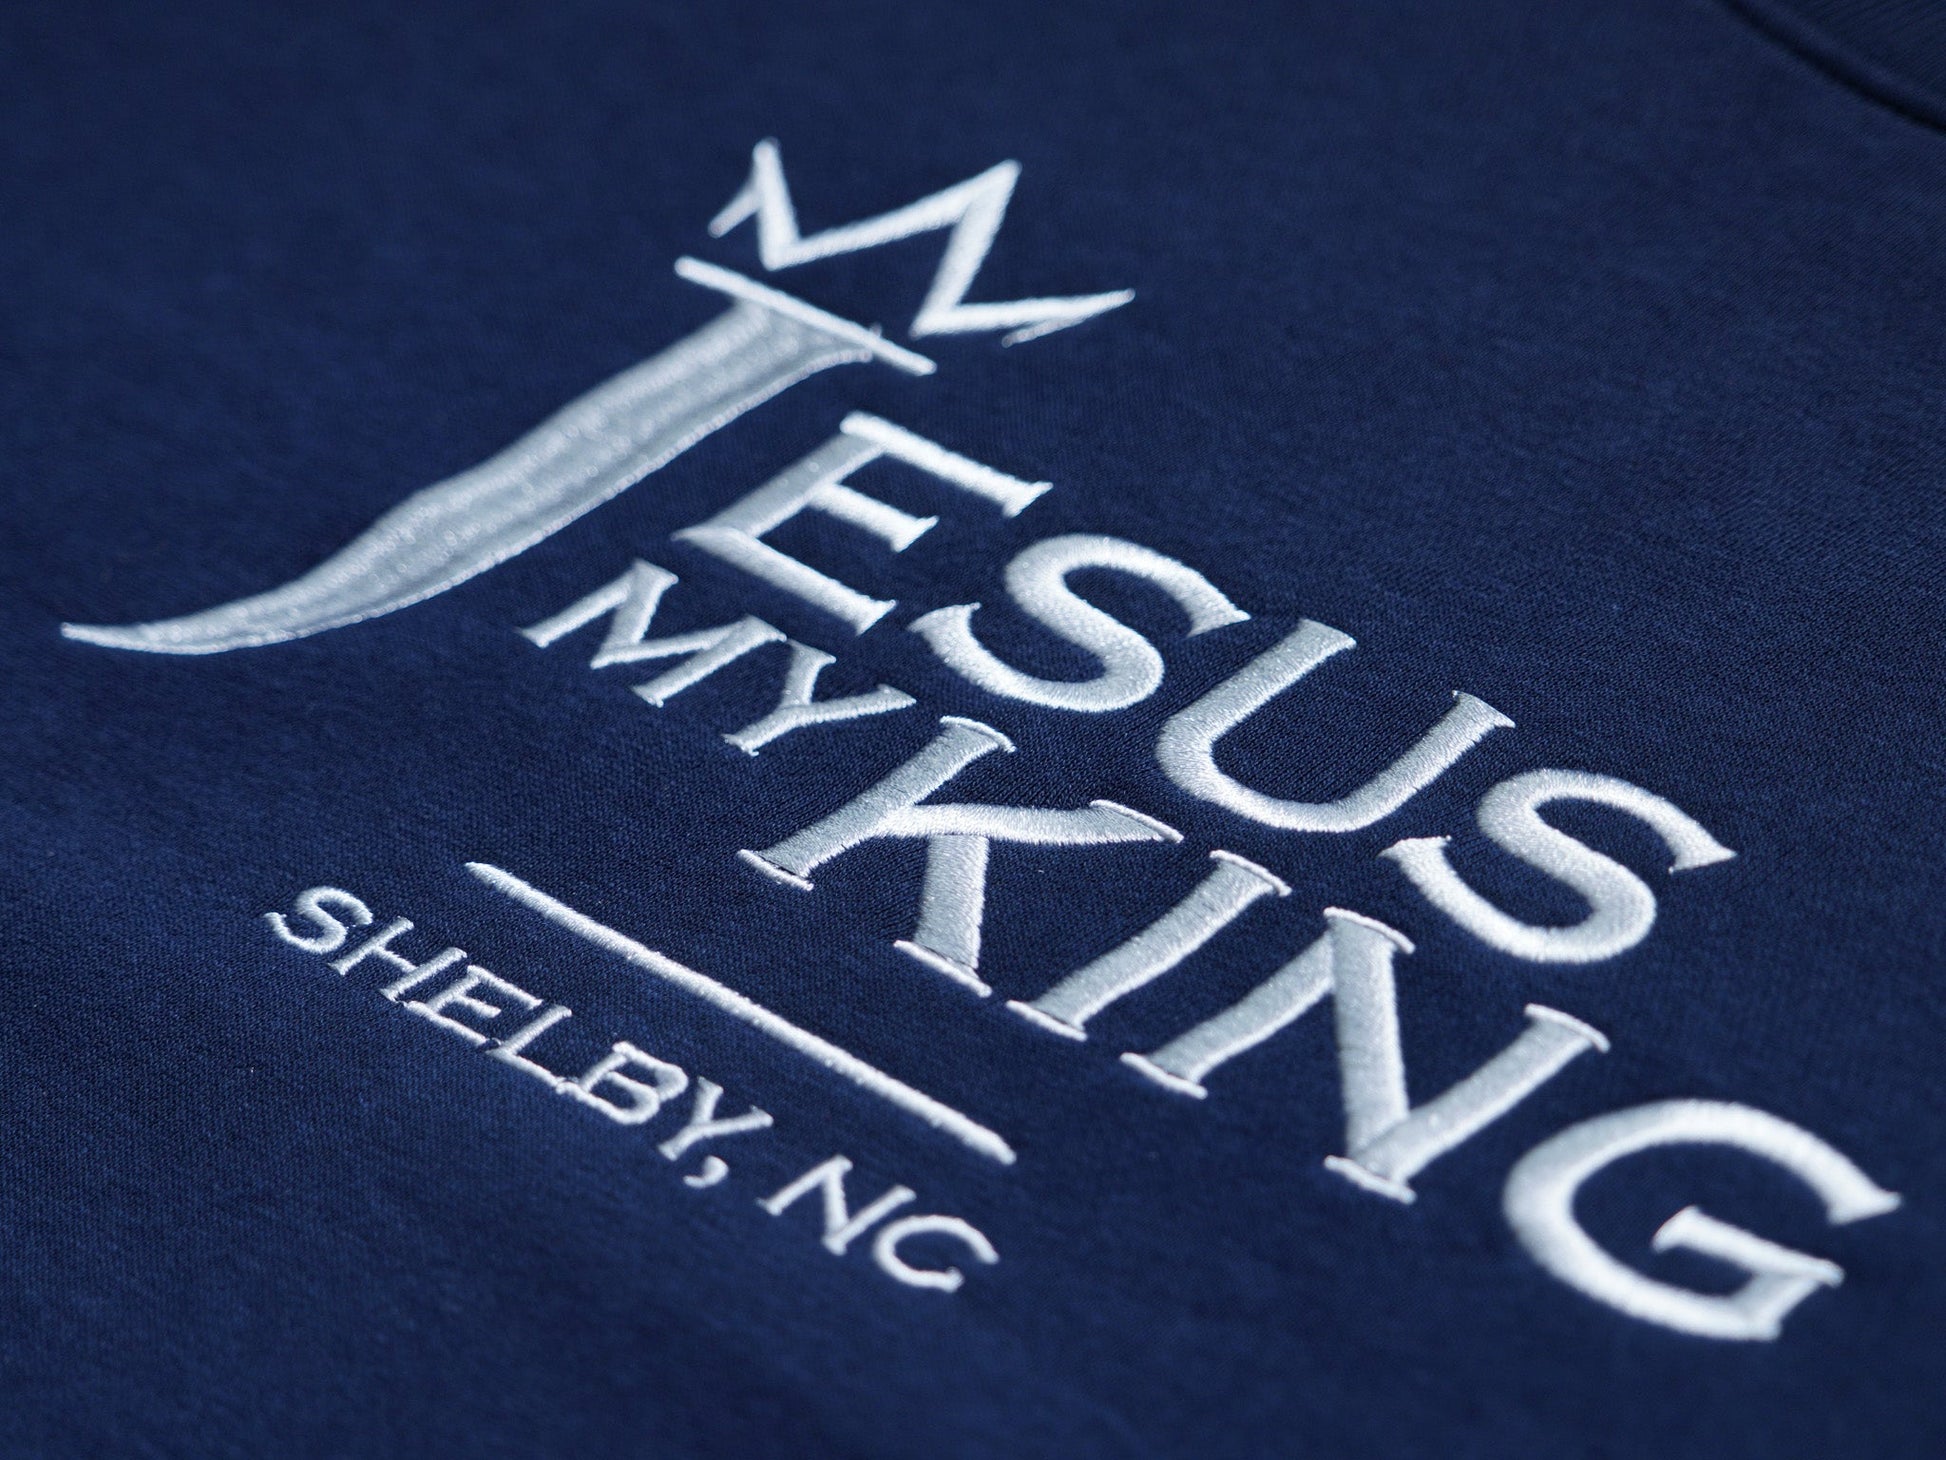 Jesus My King Sweater - Steven Francis Ministries 